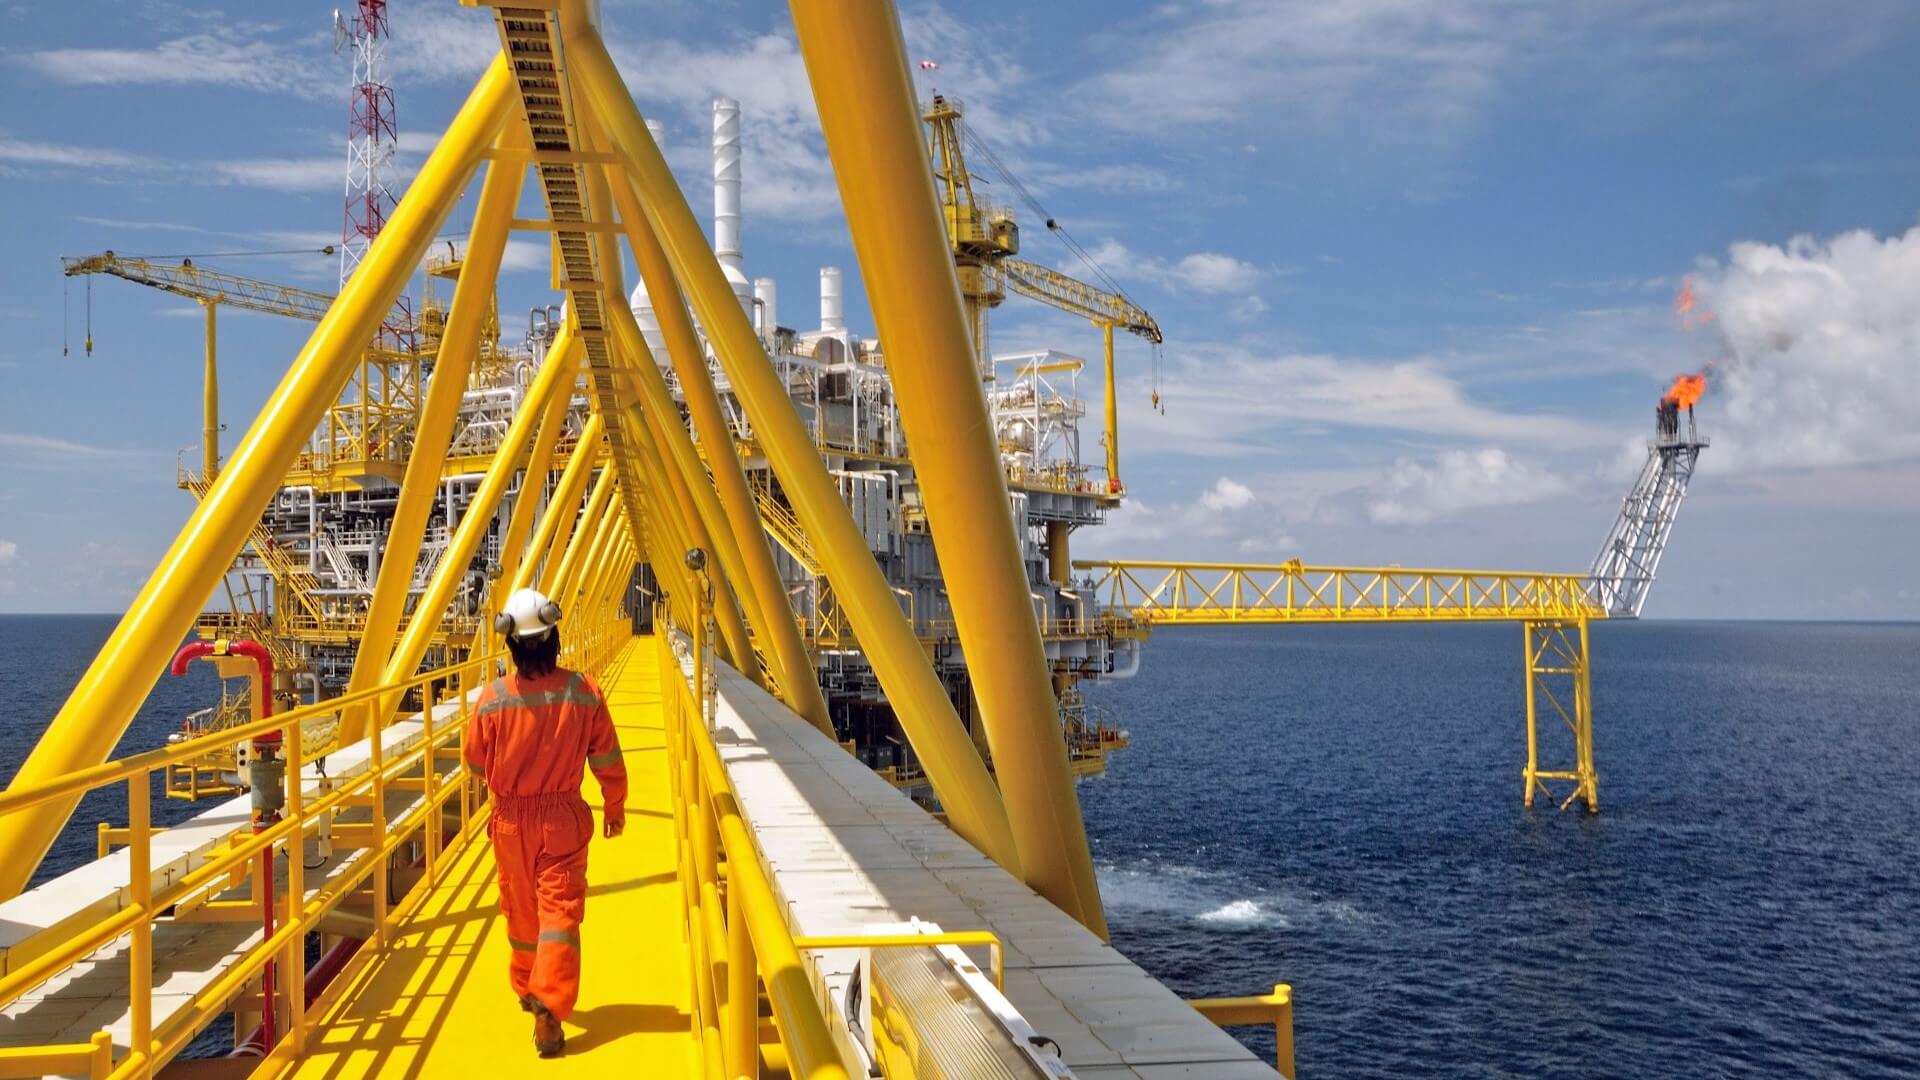 Engineer on offshore platform walkway